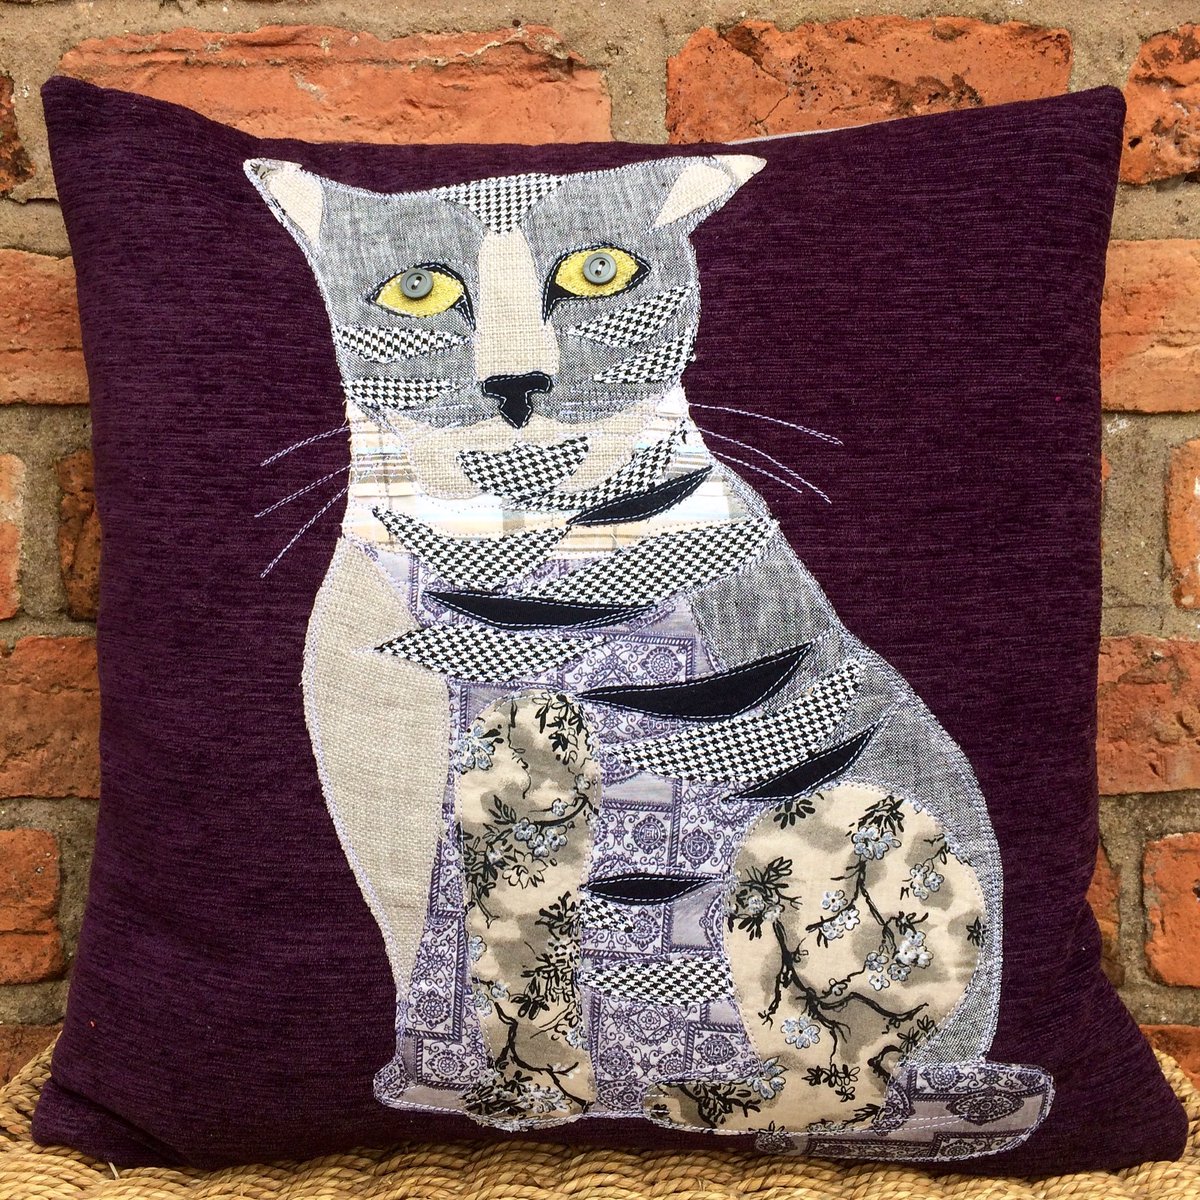 💜🐈💜Meeeeooow!💜🐈💜 Meet Jazzy the cat! A recent commission, stitched on to a dark purple corded velvet
#cat #catportrait #catcushion #catlover #catlove #purplevelvet #petportrait #personalised #thetartanfox #applique #textiledesign #handmade #madeinshropshire #shropshire